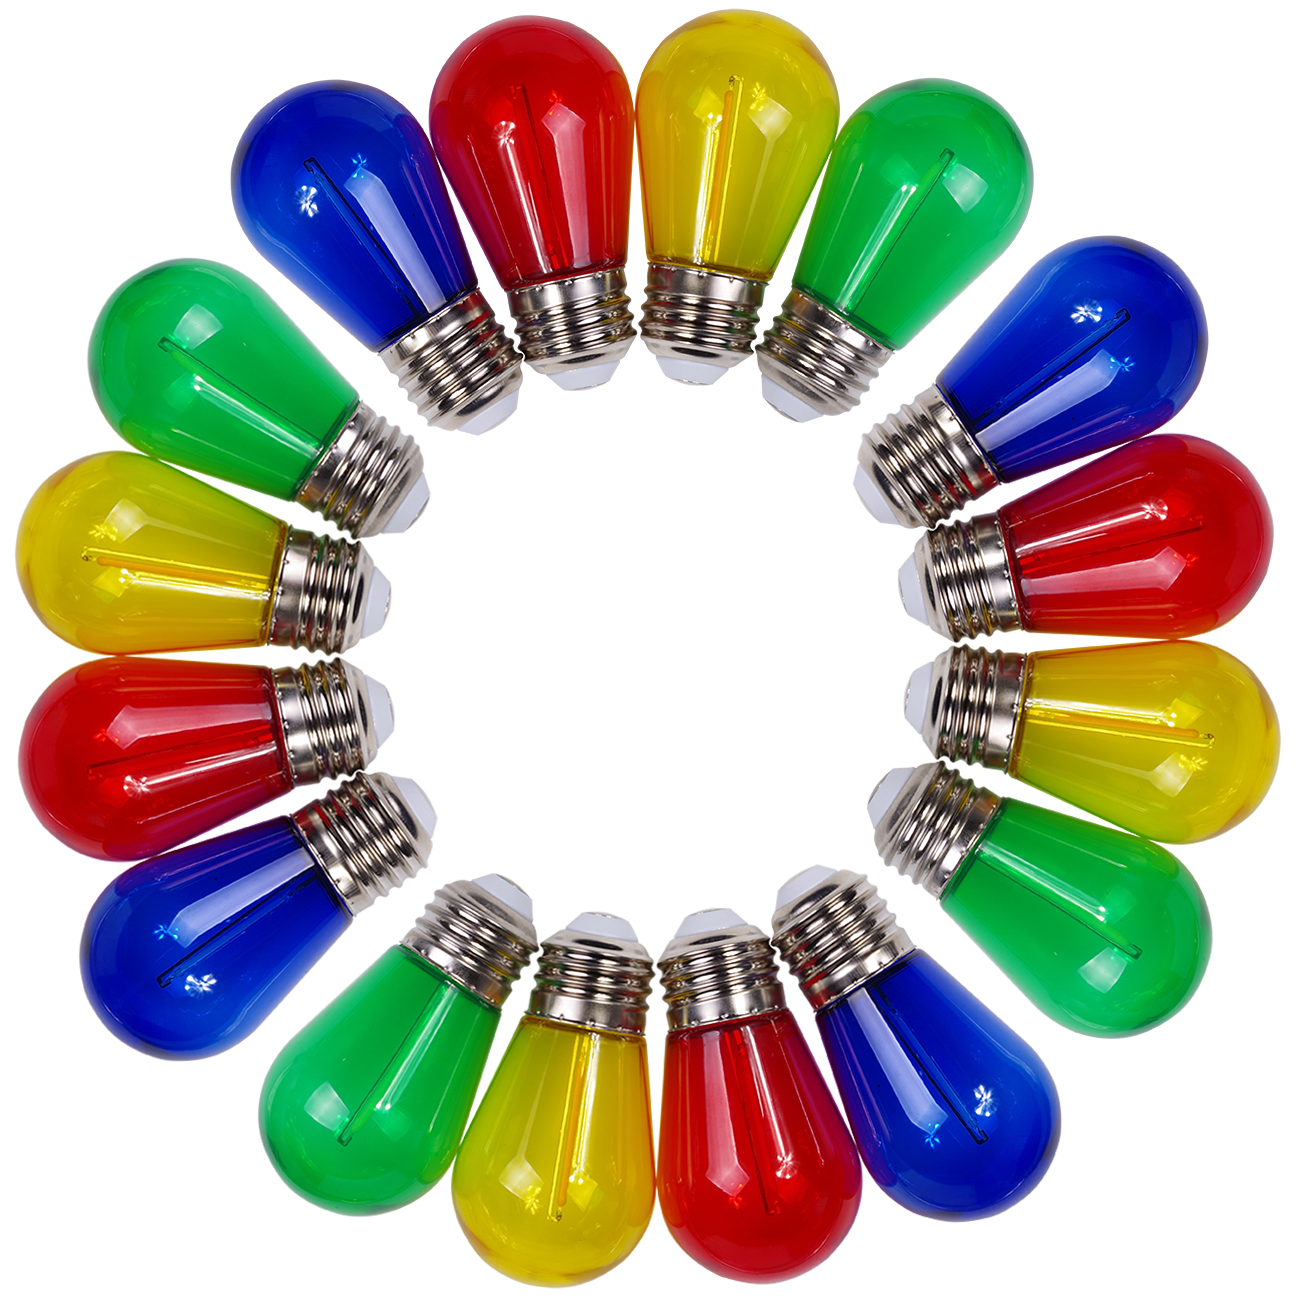 Jslinter Colored String LED Light Bulbs - 1 watt Plastic Outdoor